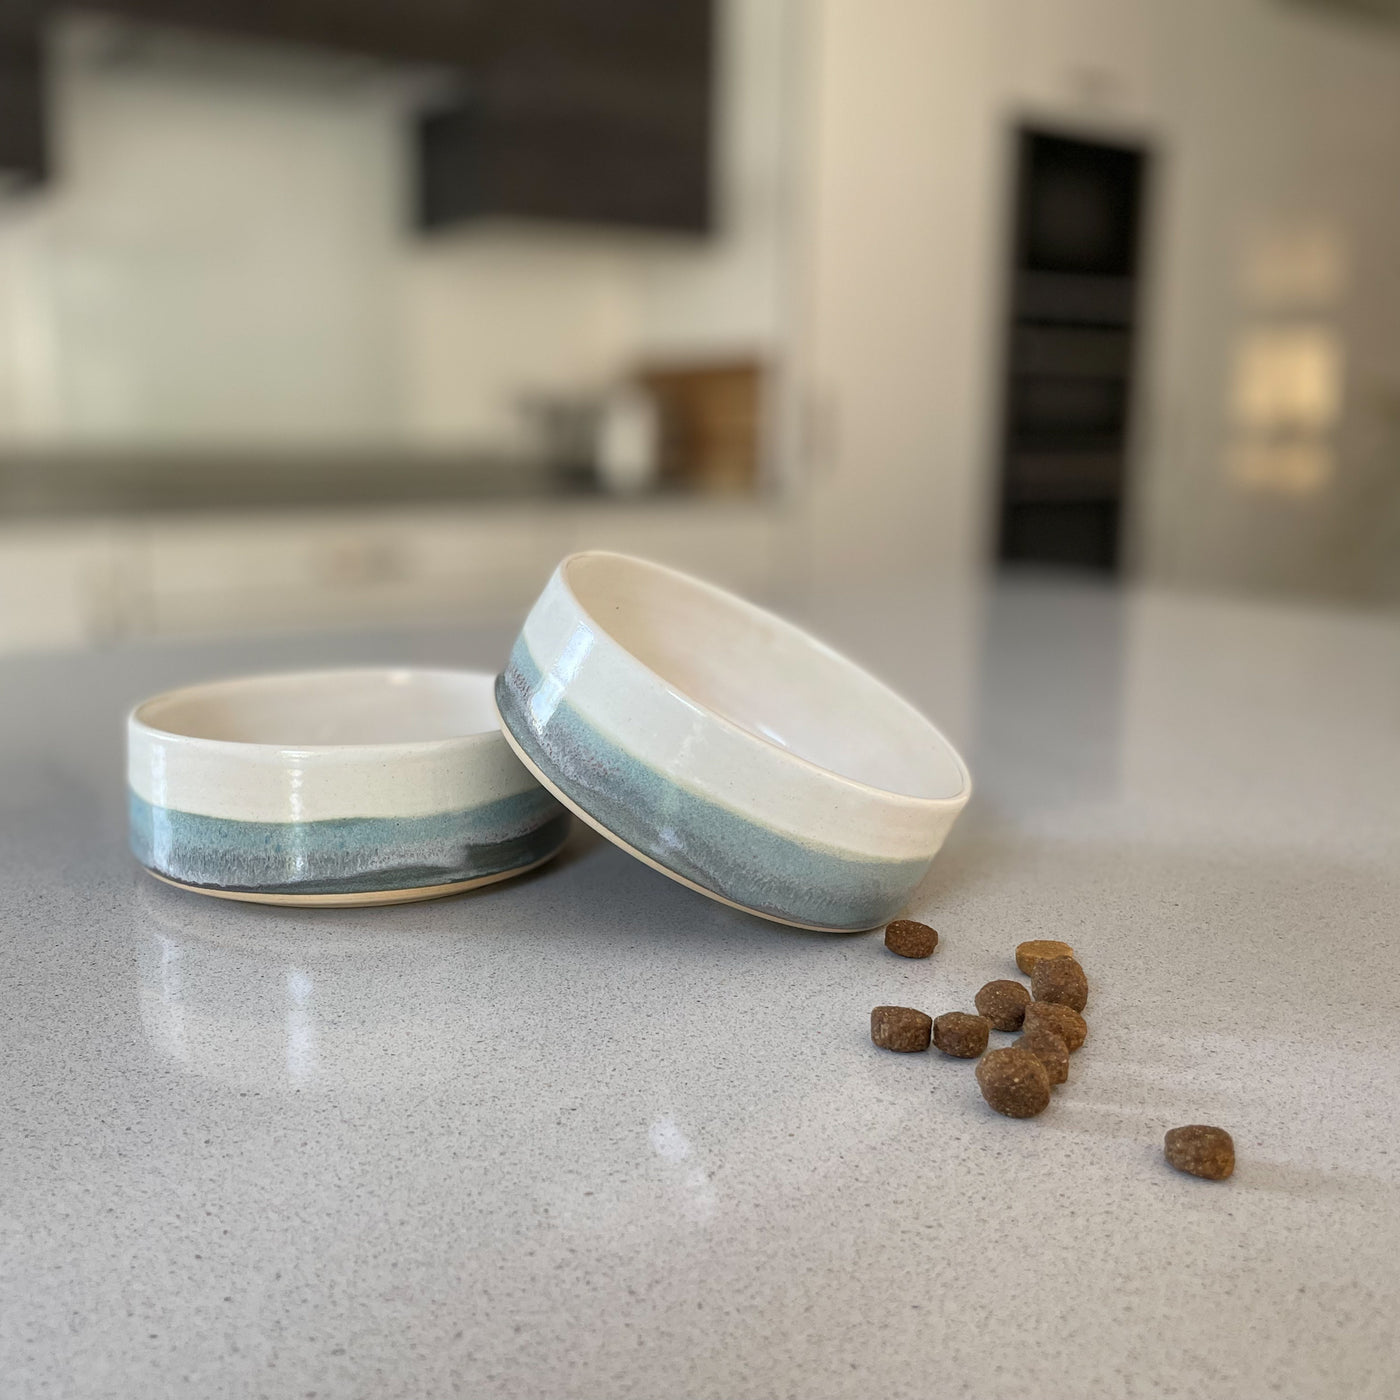 Ceramic dog food bowl in a two-tone speckled grey glaze.